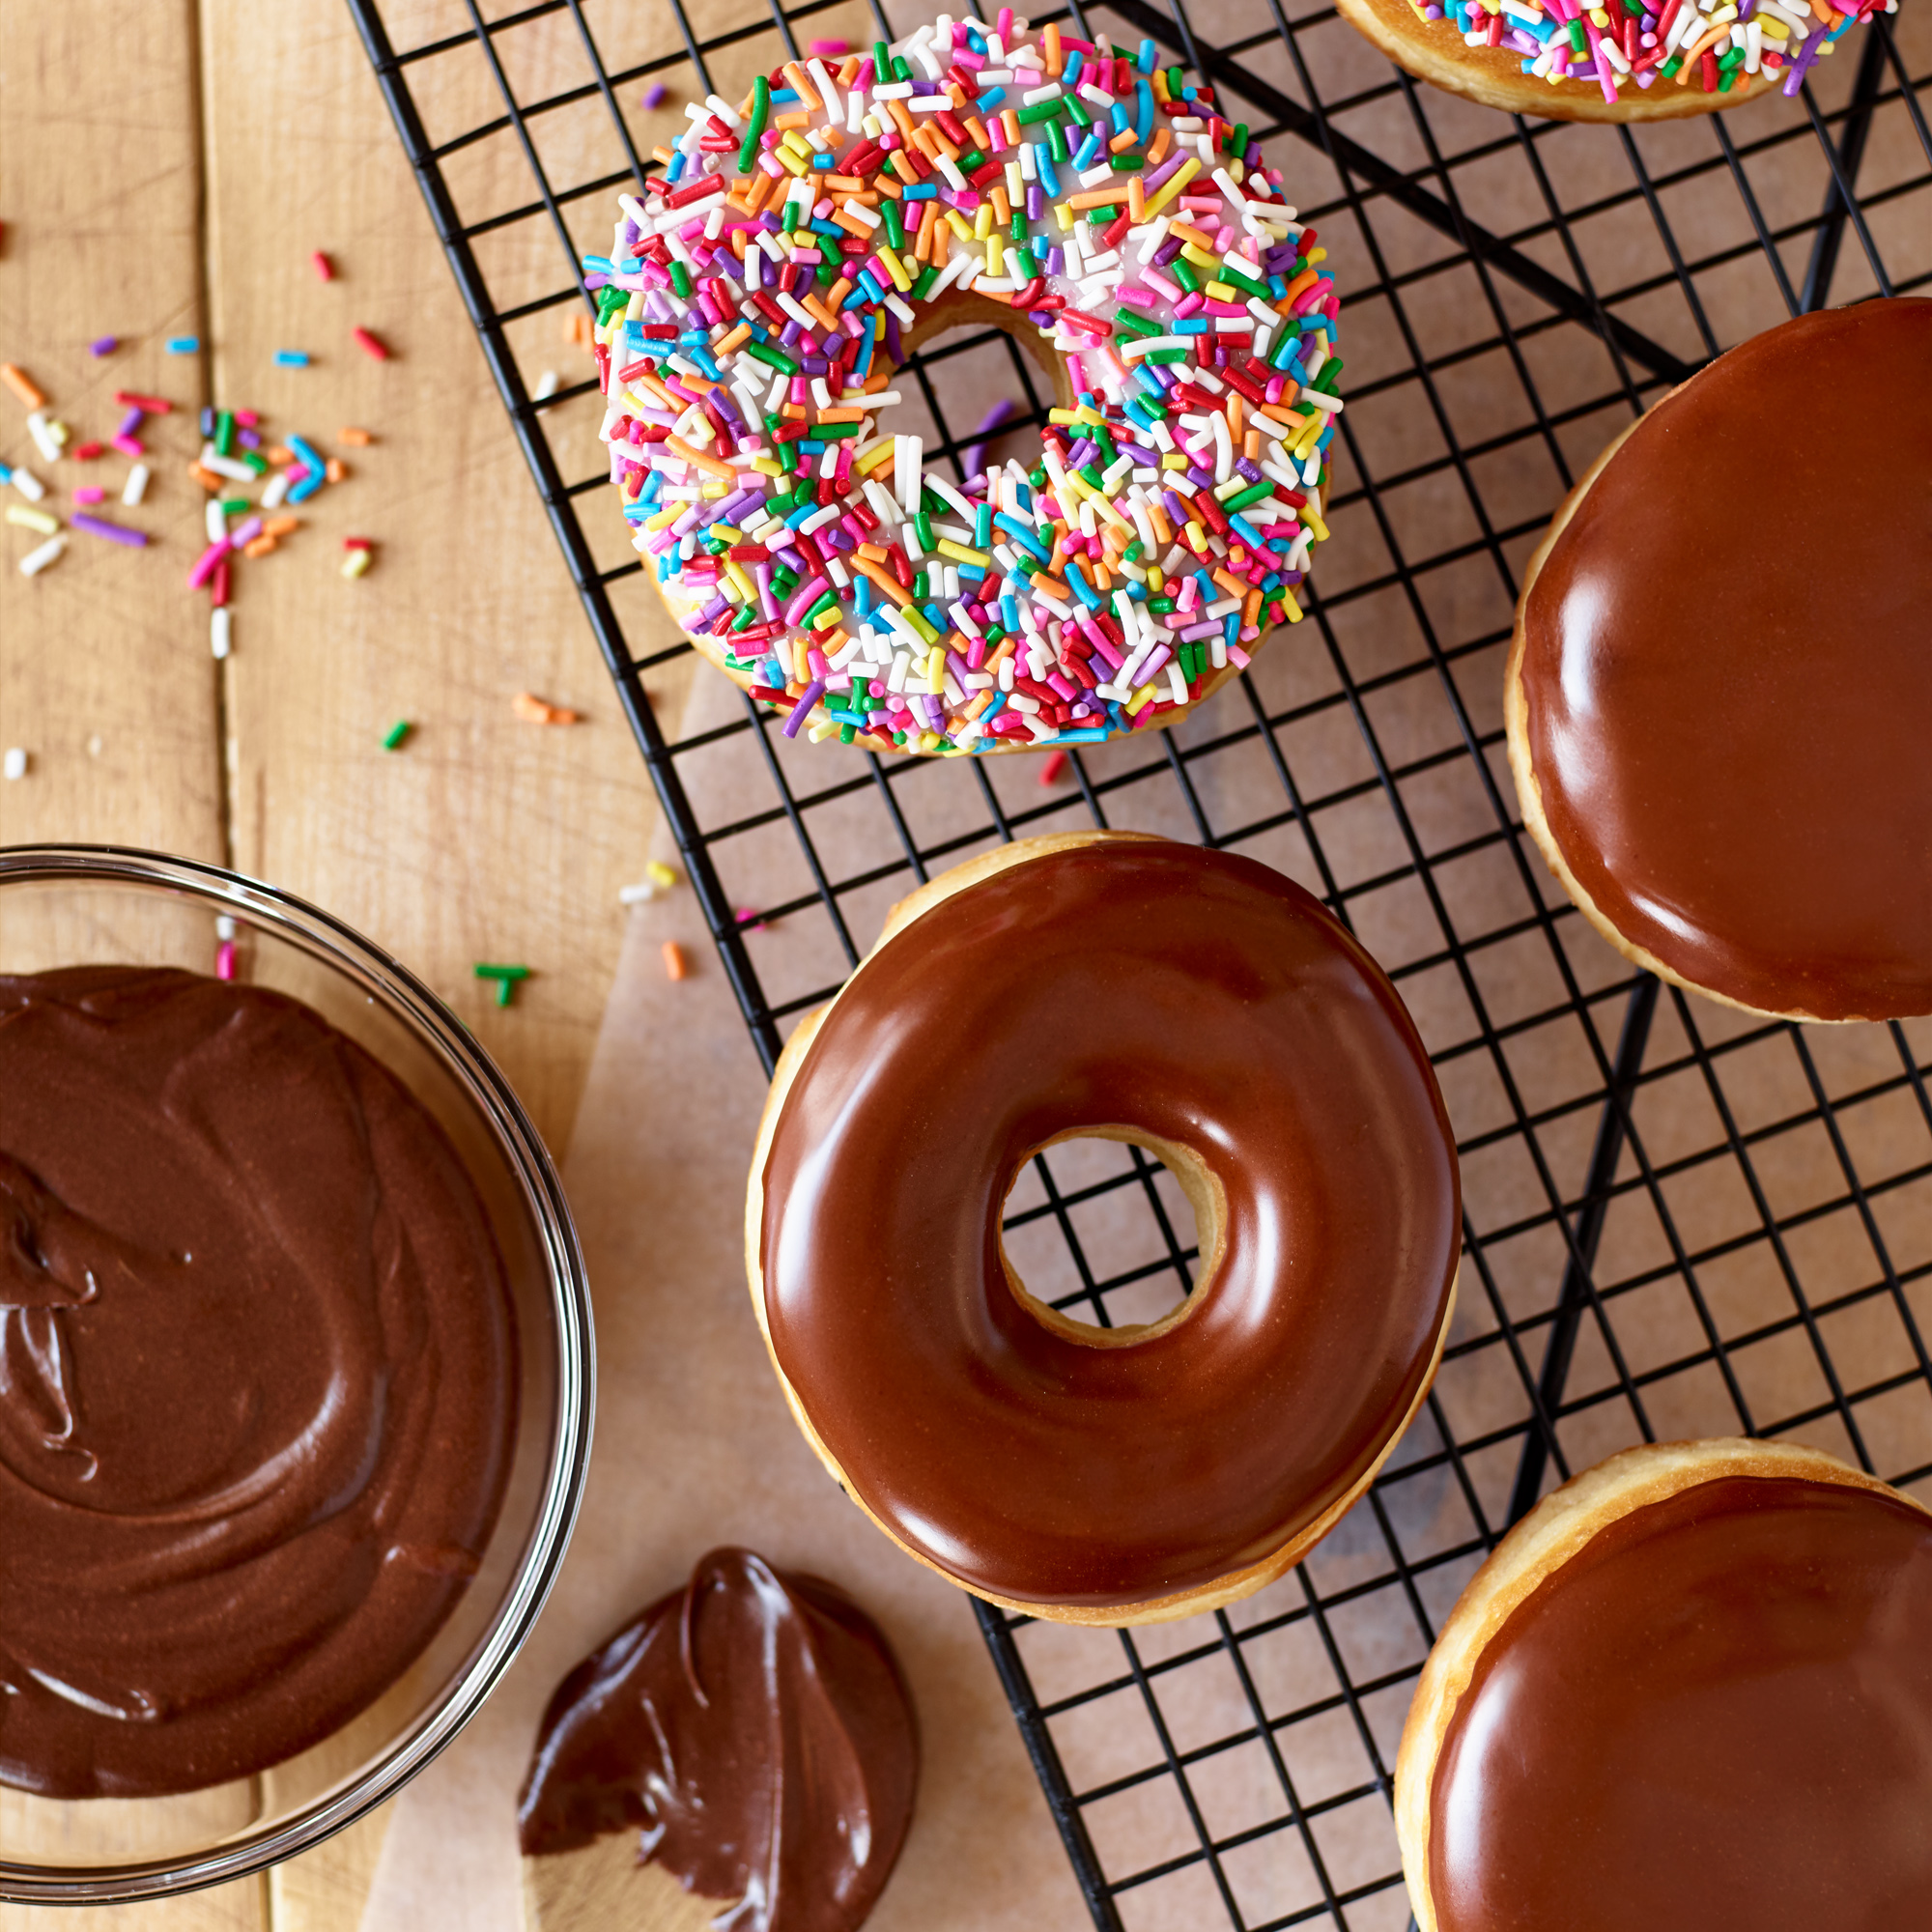 Food Photo -Chocolate Glazed Donuts